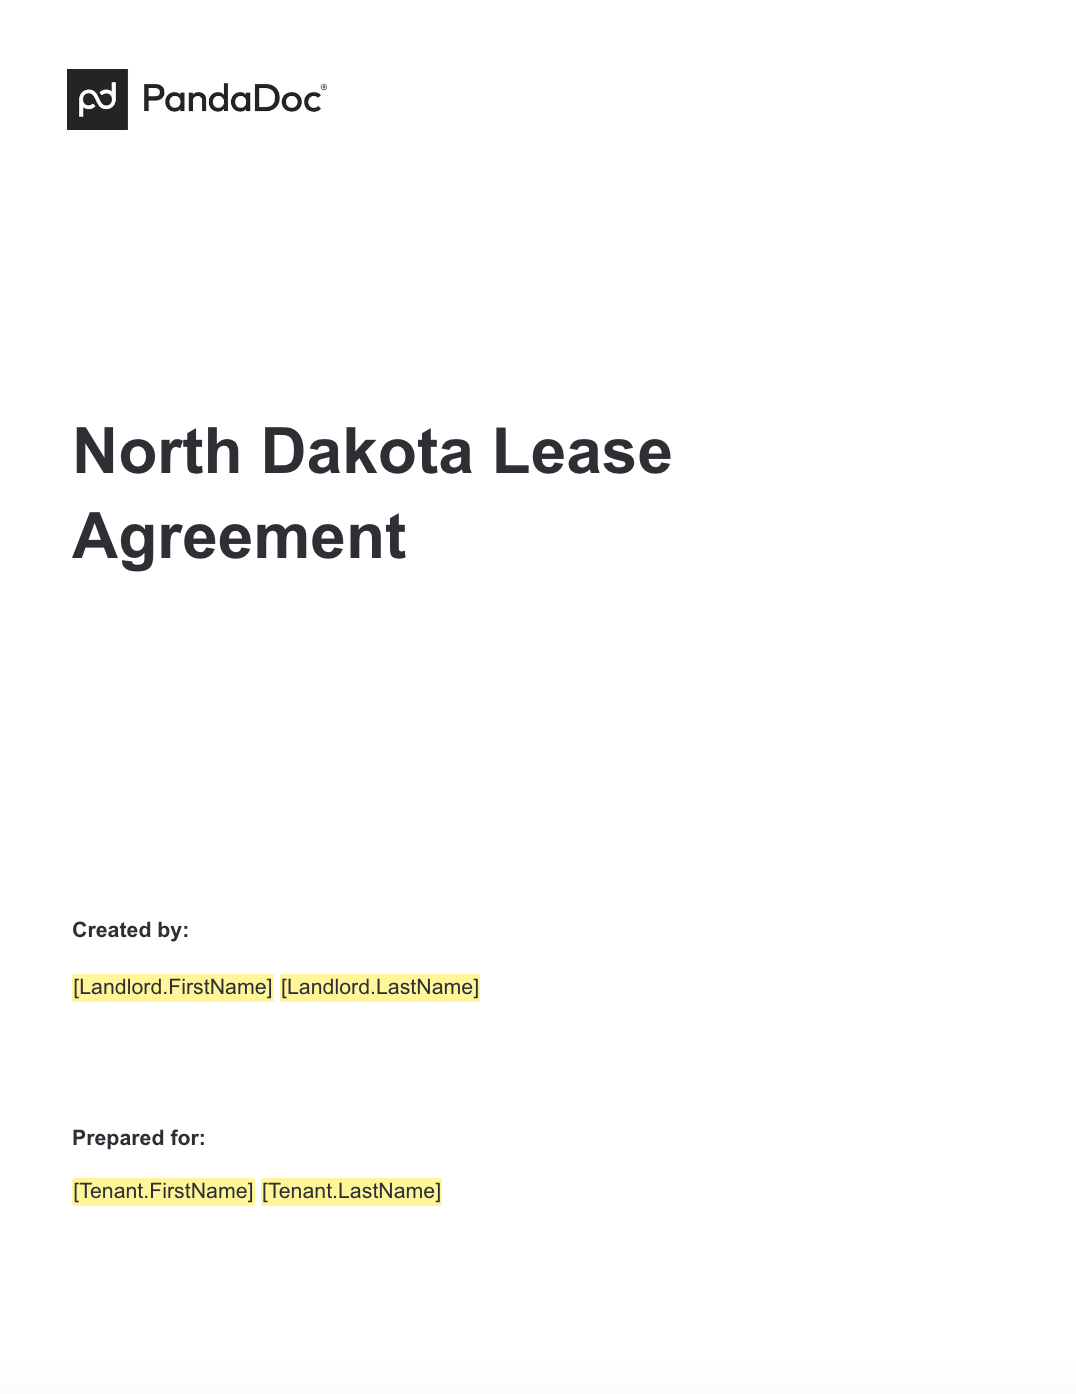 North Dakota Lease Agreements